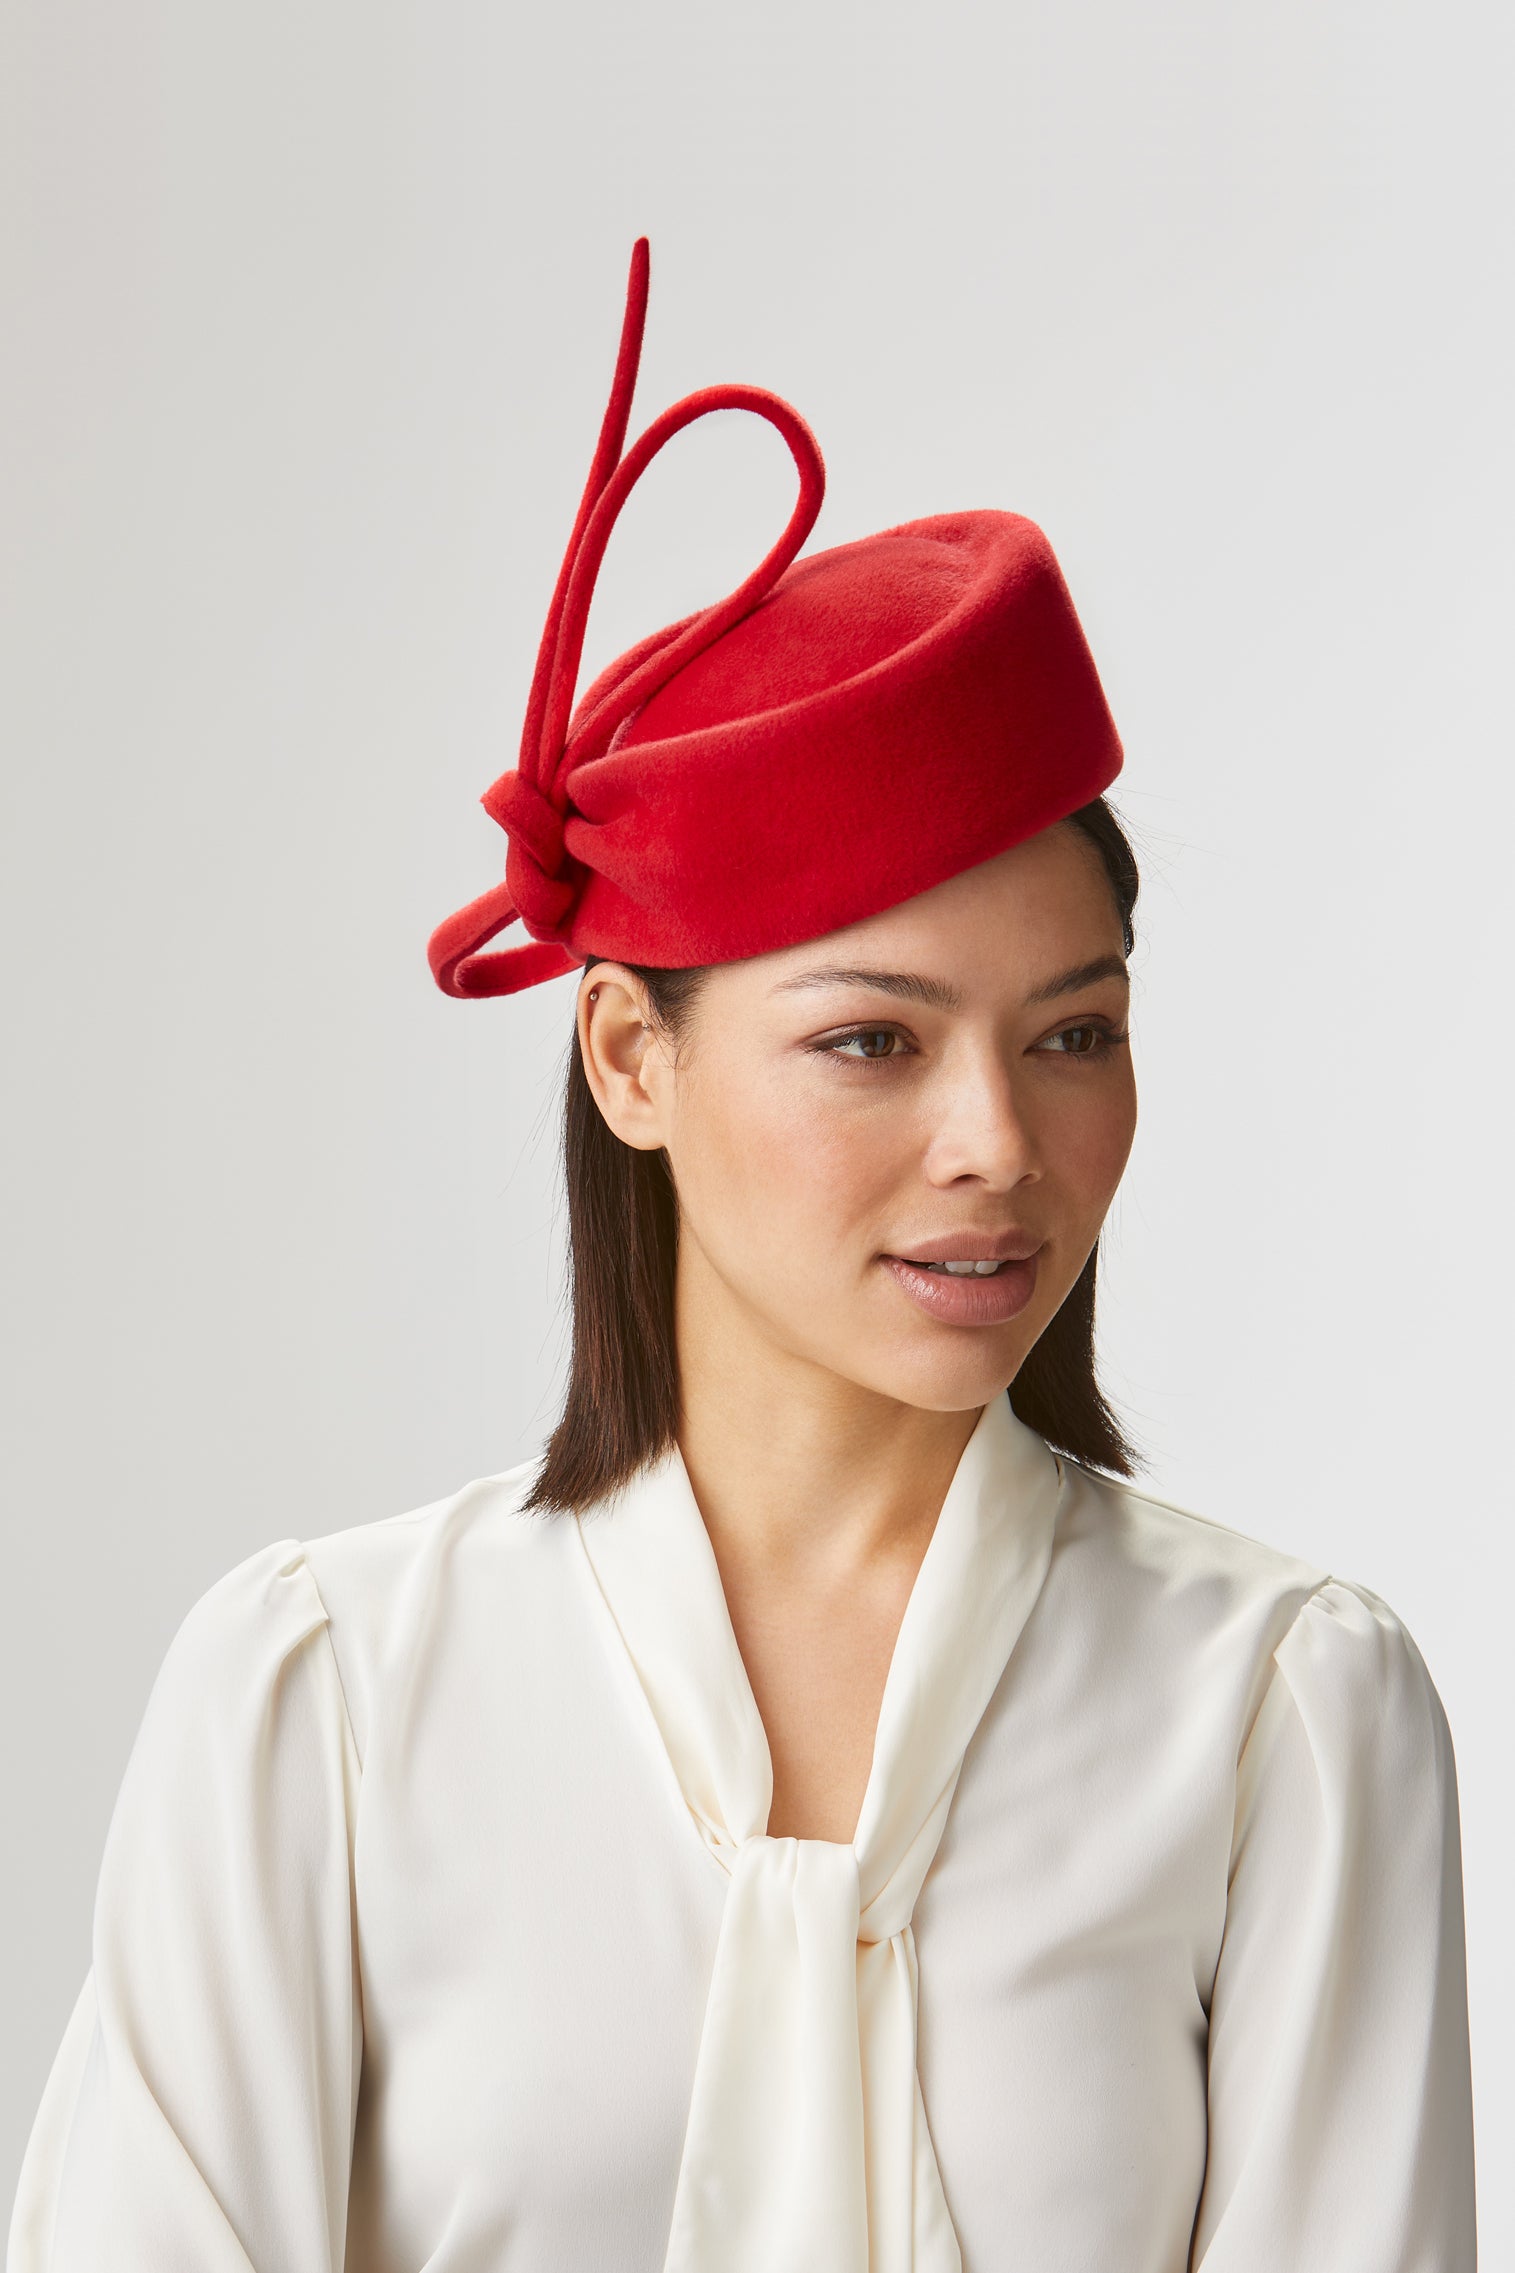 Mayfair Red Pillbox Hat - Royal Ascot Hats - Lock & Co. Hatters London UK